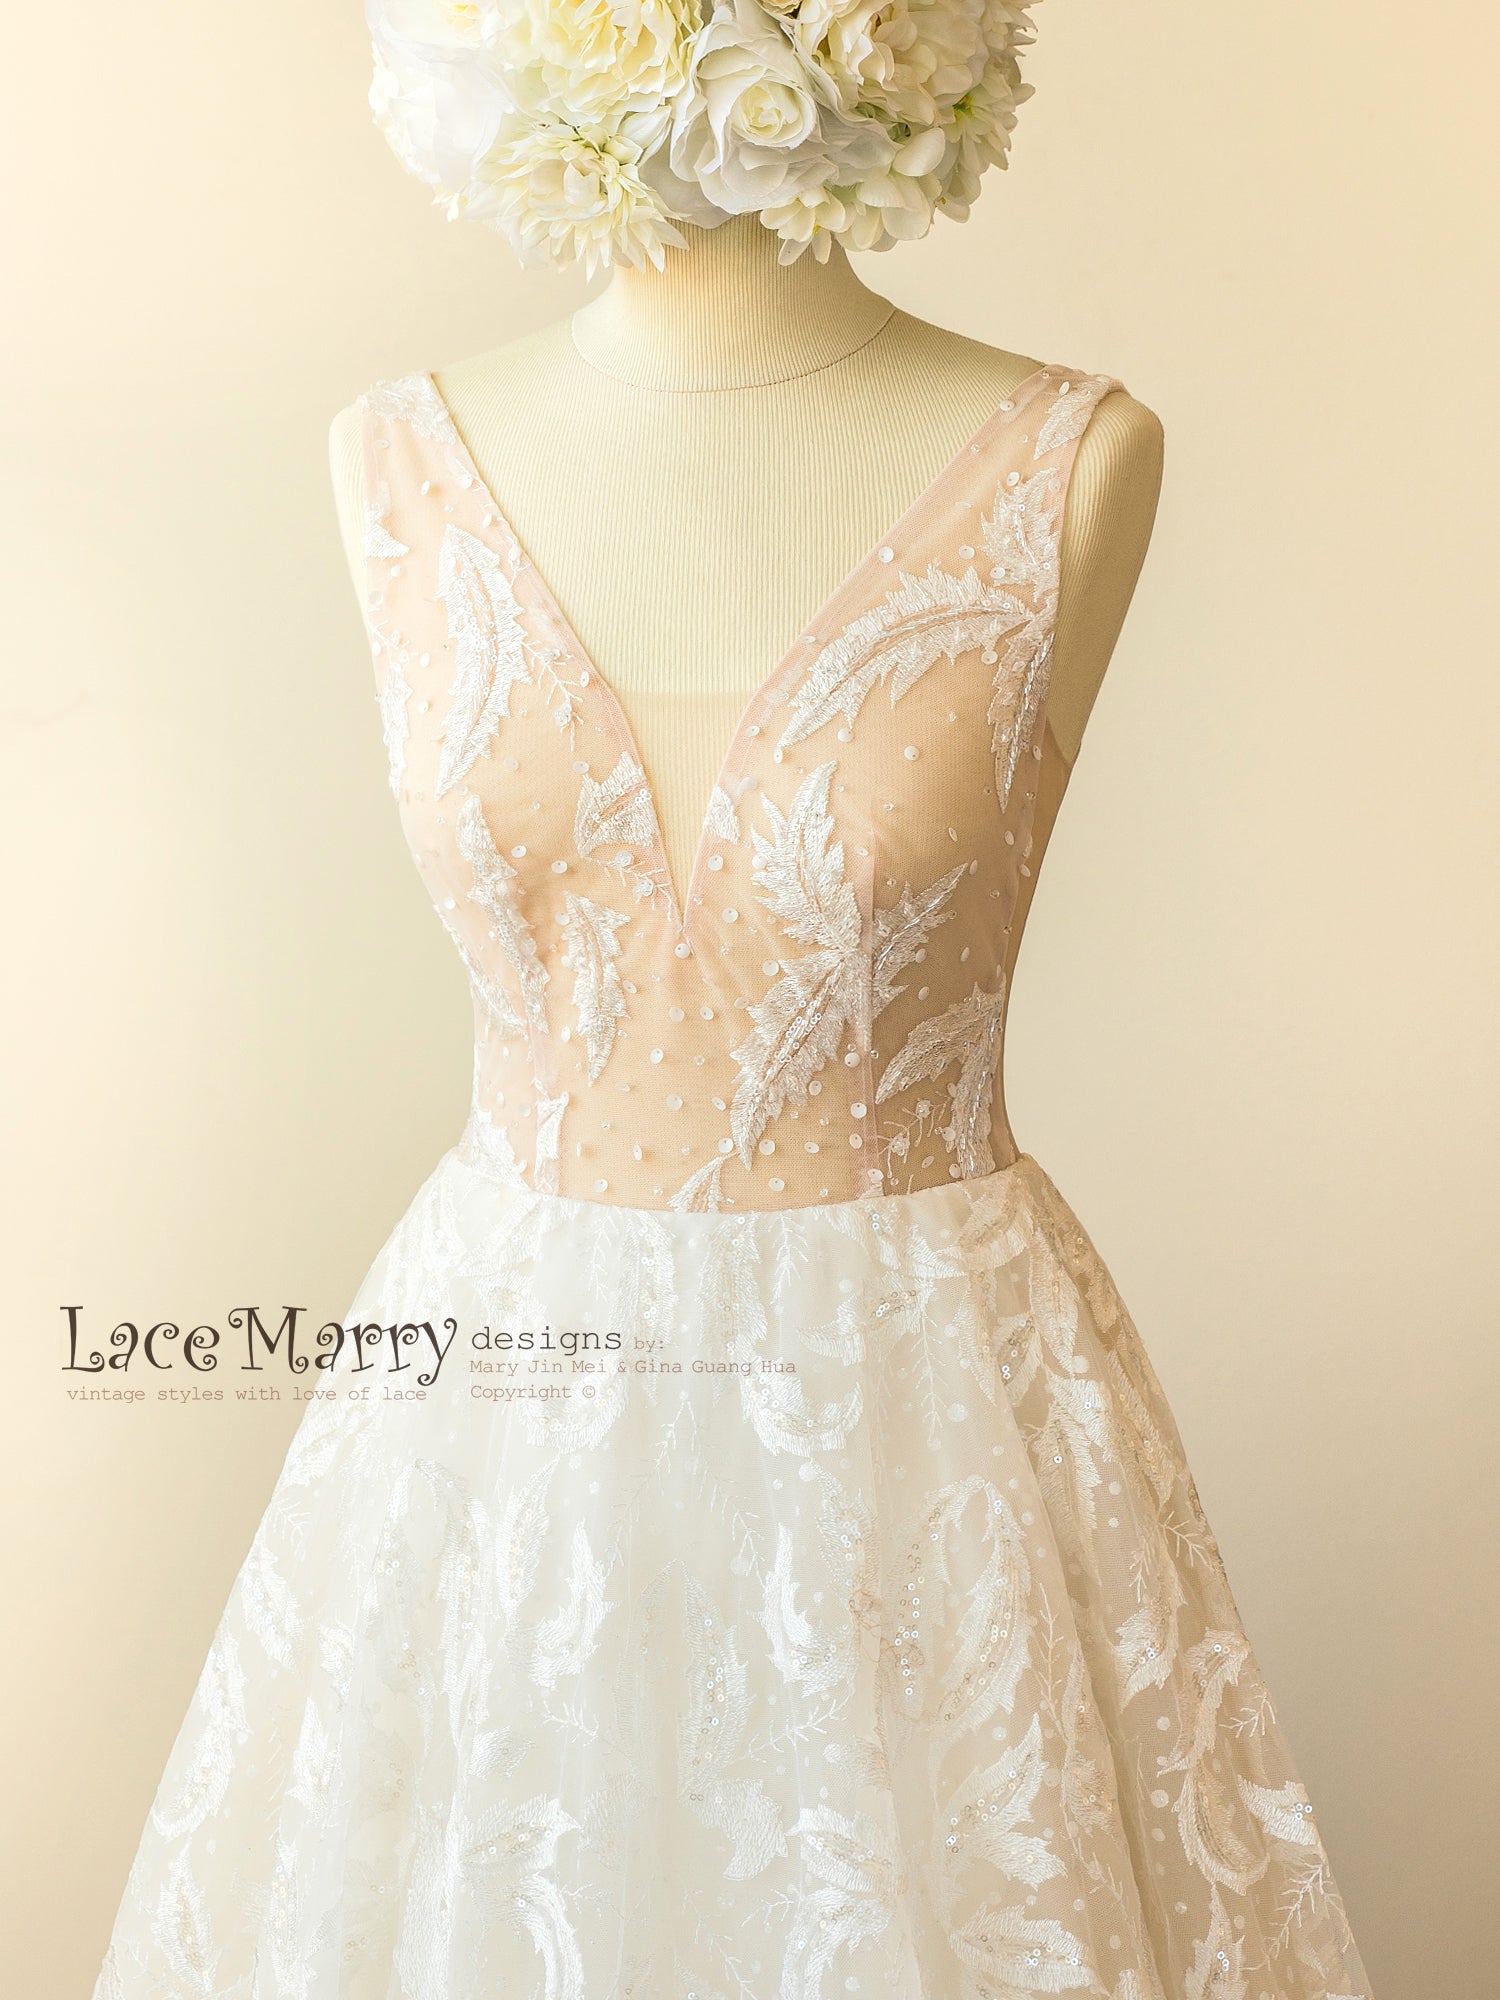 Janet Dress Dots Tulle Mini Dress Short Wedding Dress Polka -  Hong Kong